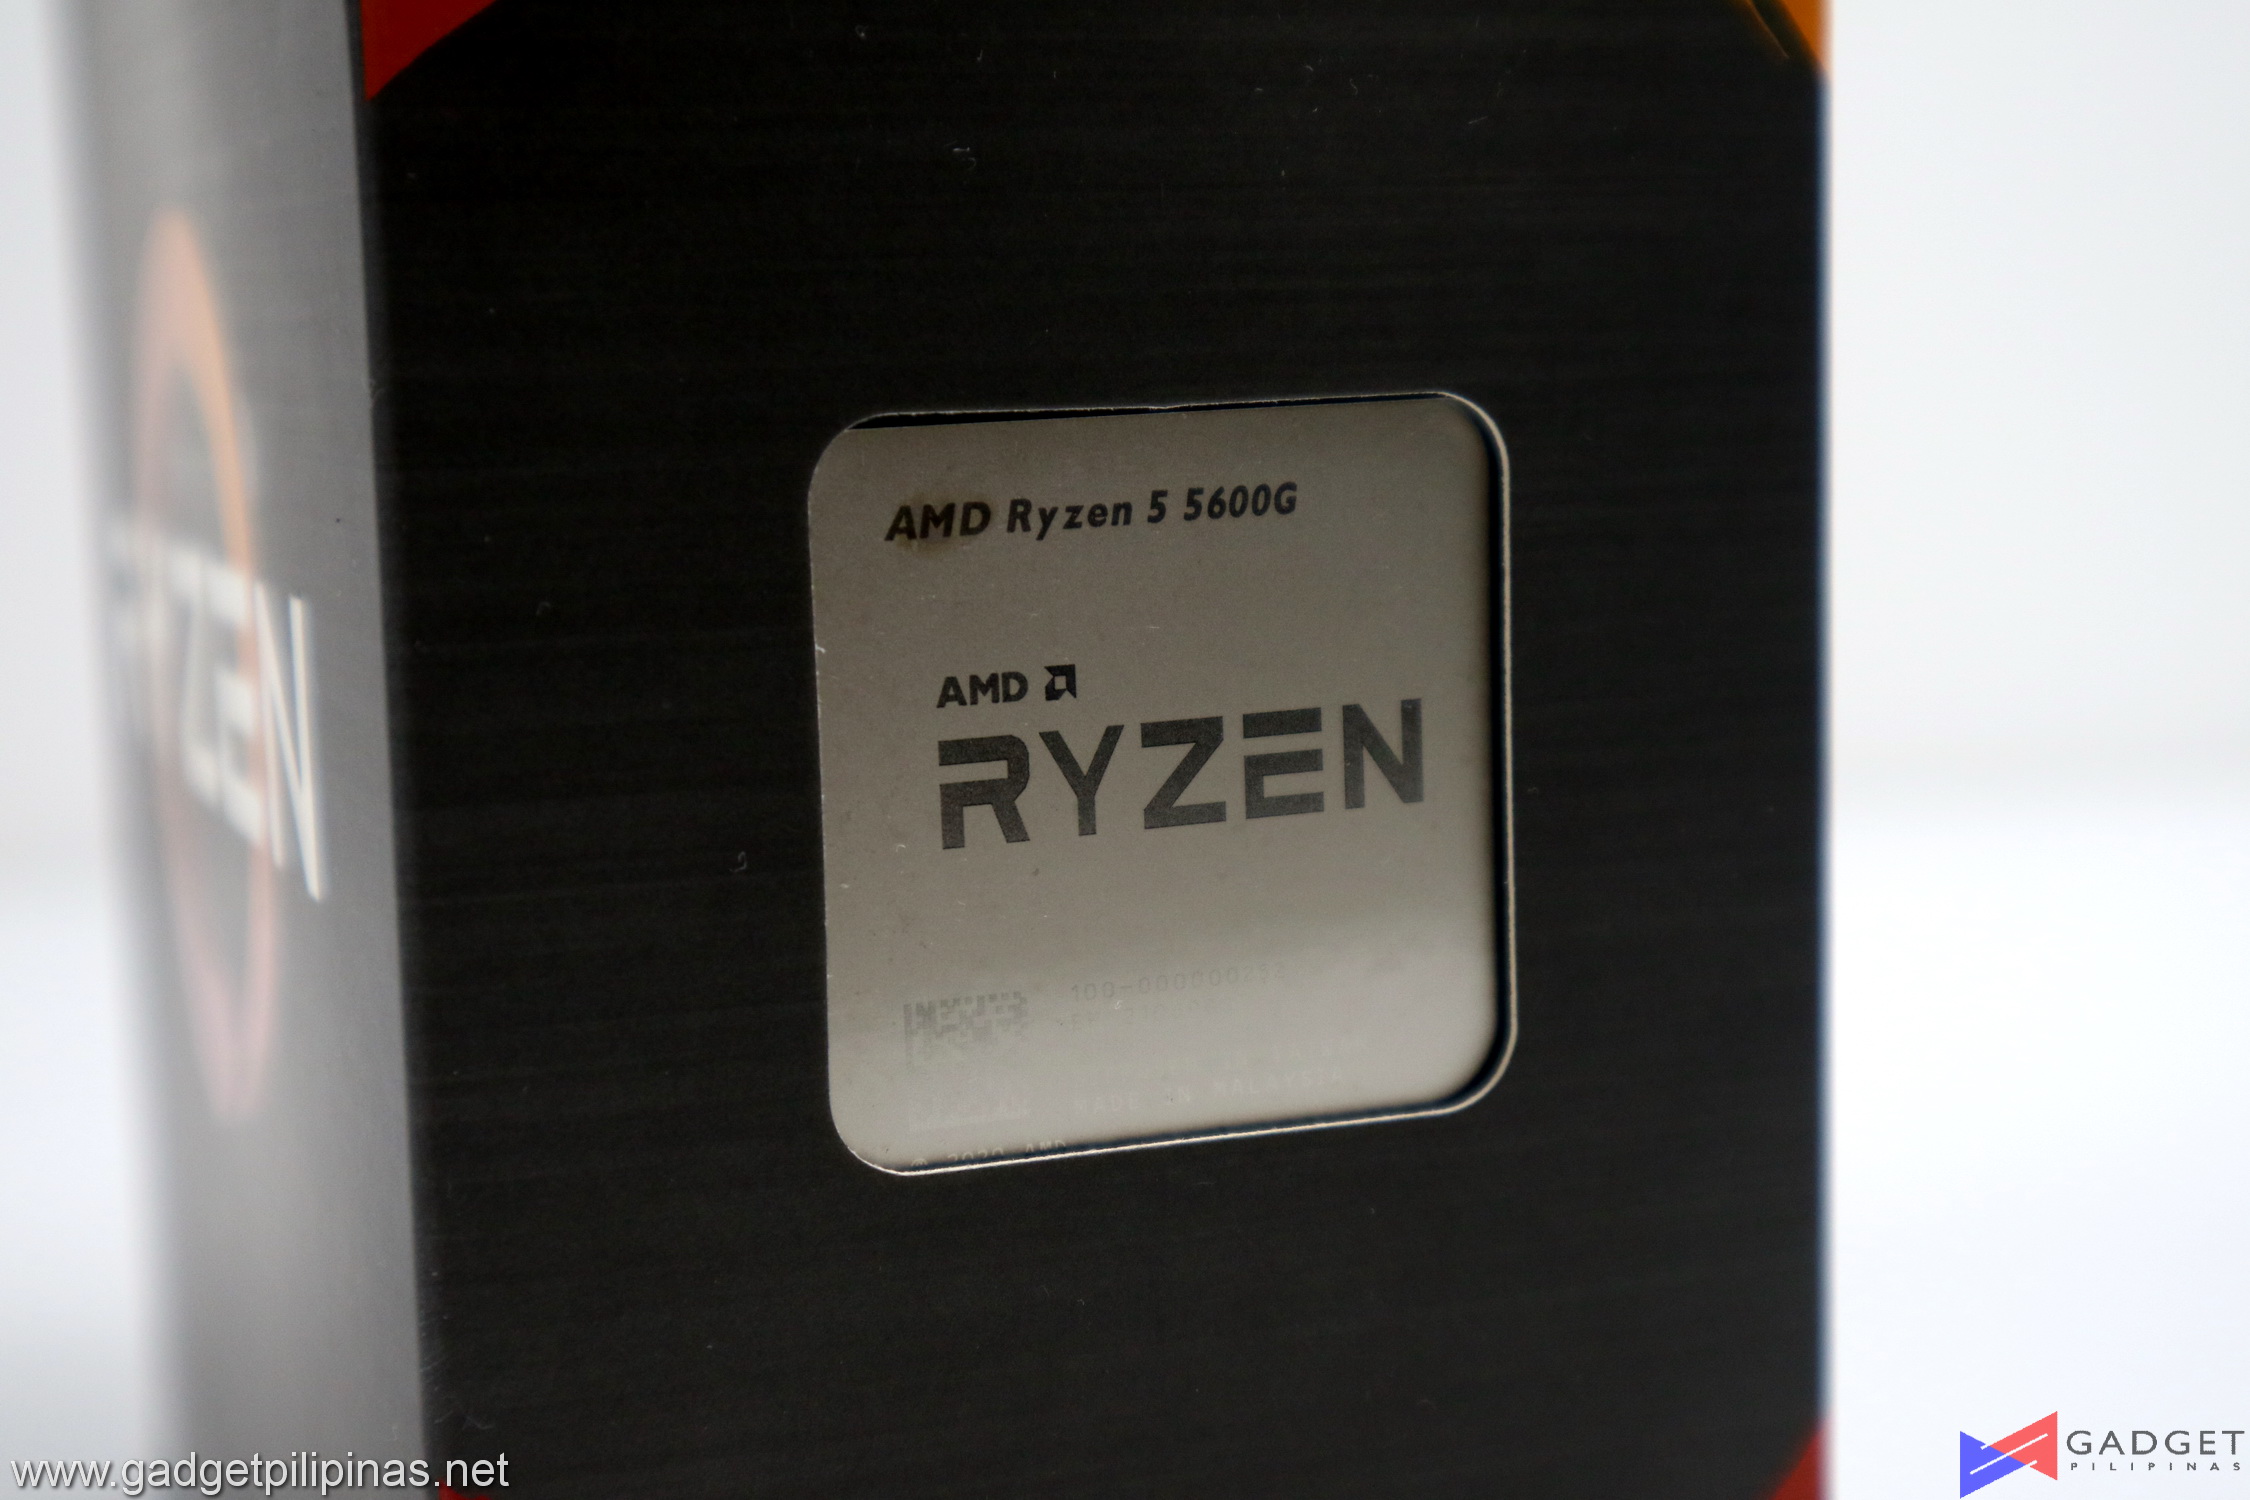 AMD Ryzen 5 5600G Review Philippines - 5600G Price PH